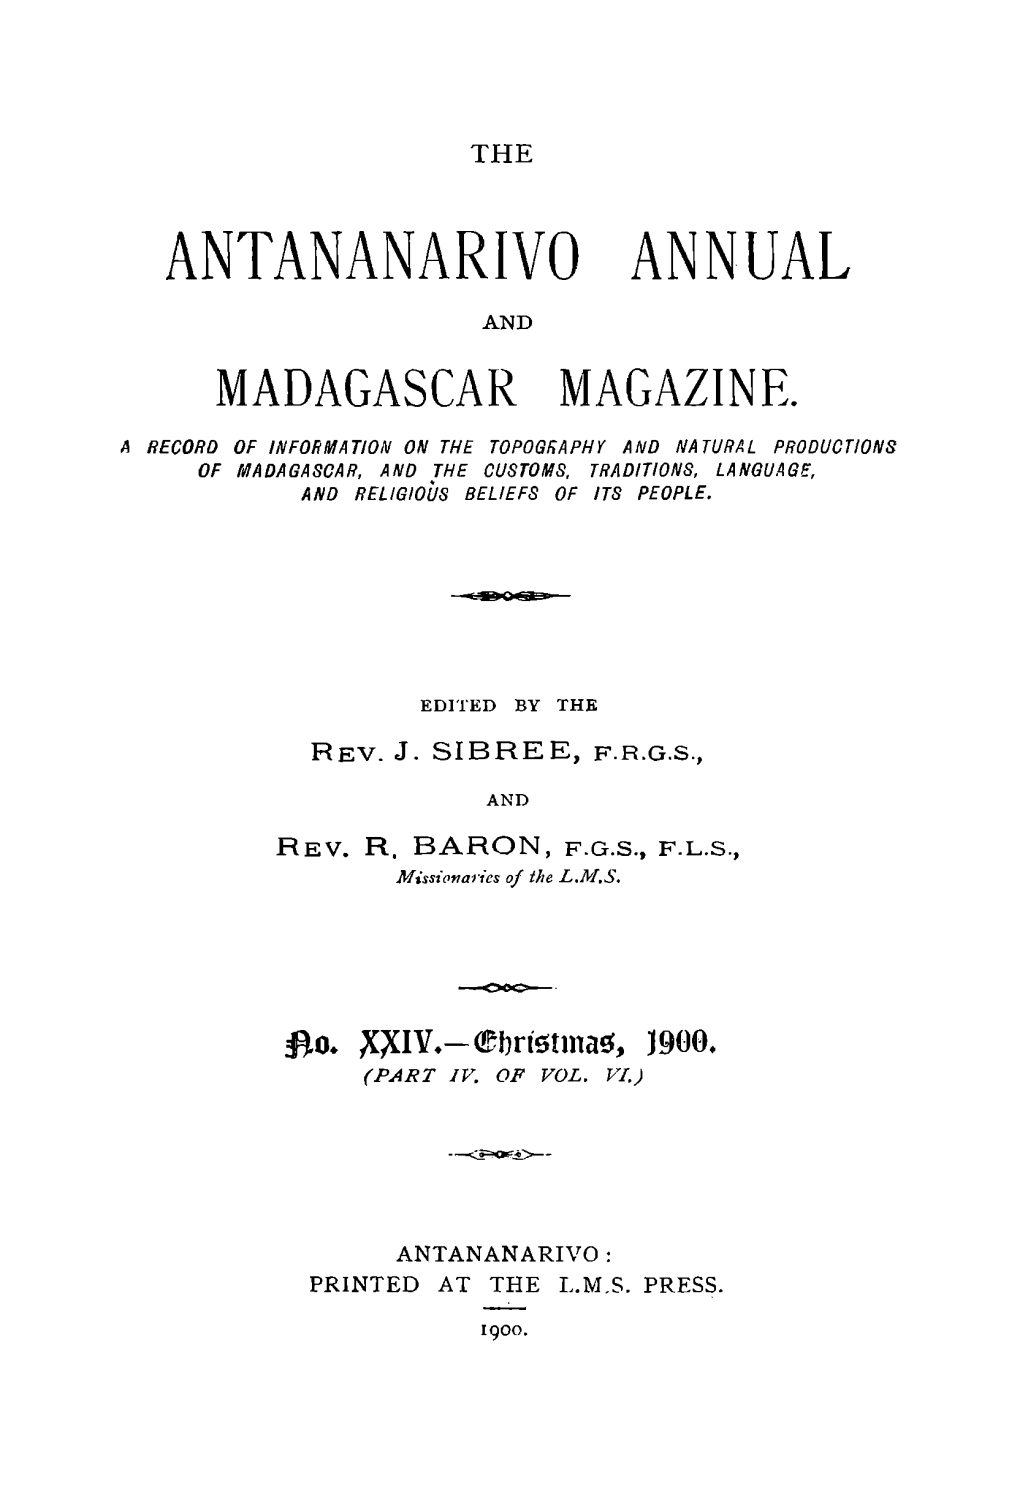 Antananarivo Annual